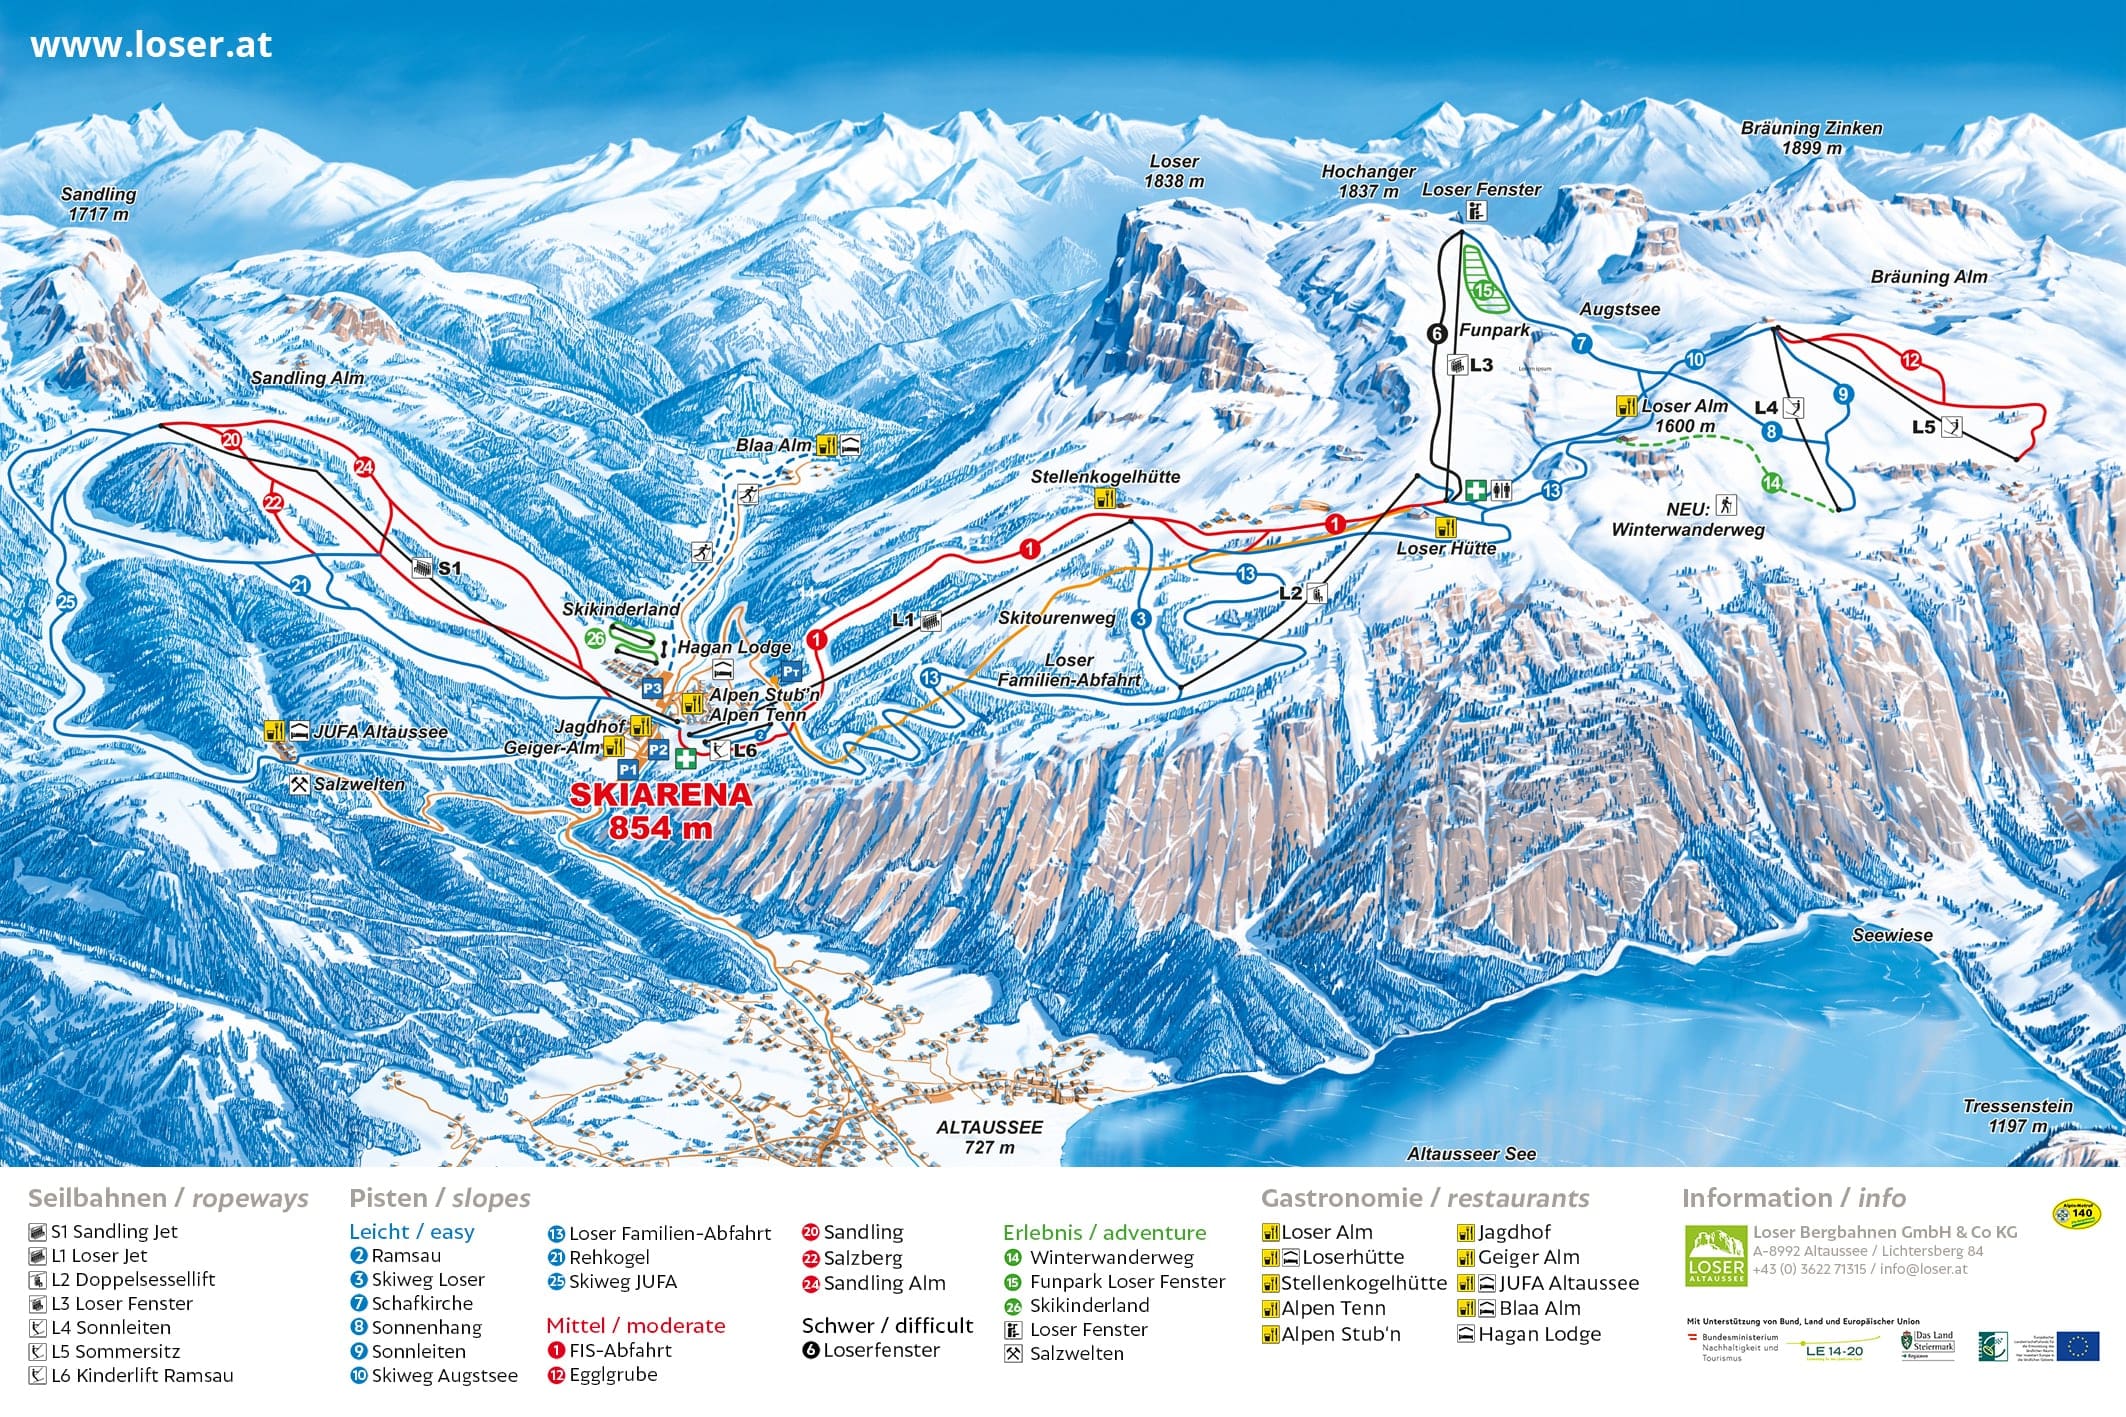 Stacja narciarska - Loser – Altaussee – Schneebären